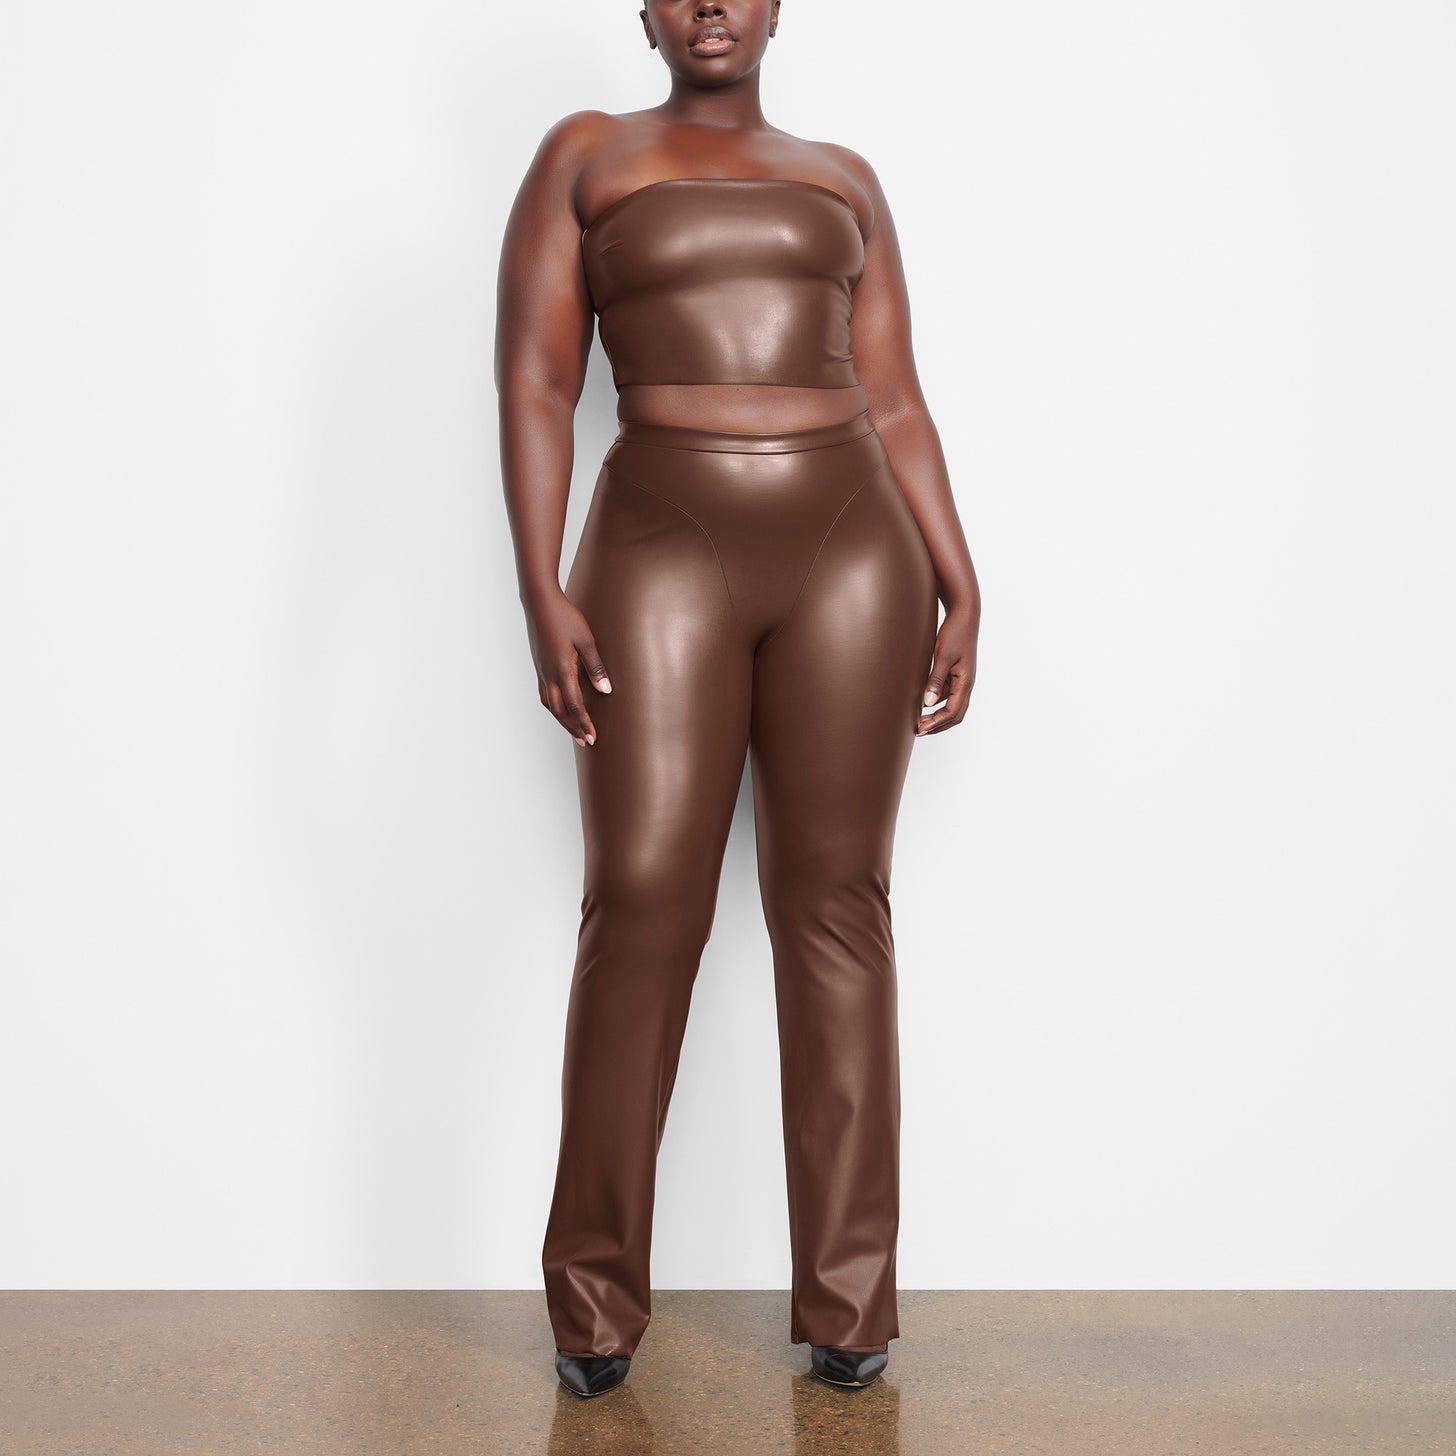 Kim Kardashian Models Rubber and Faux Leather Swimwear for SKIMS